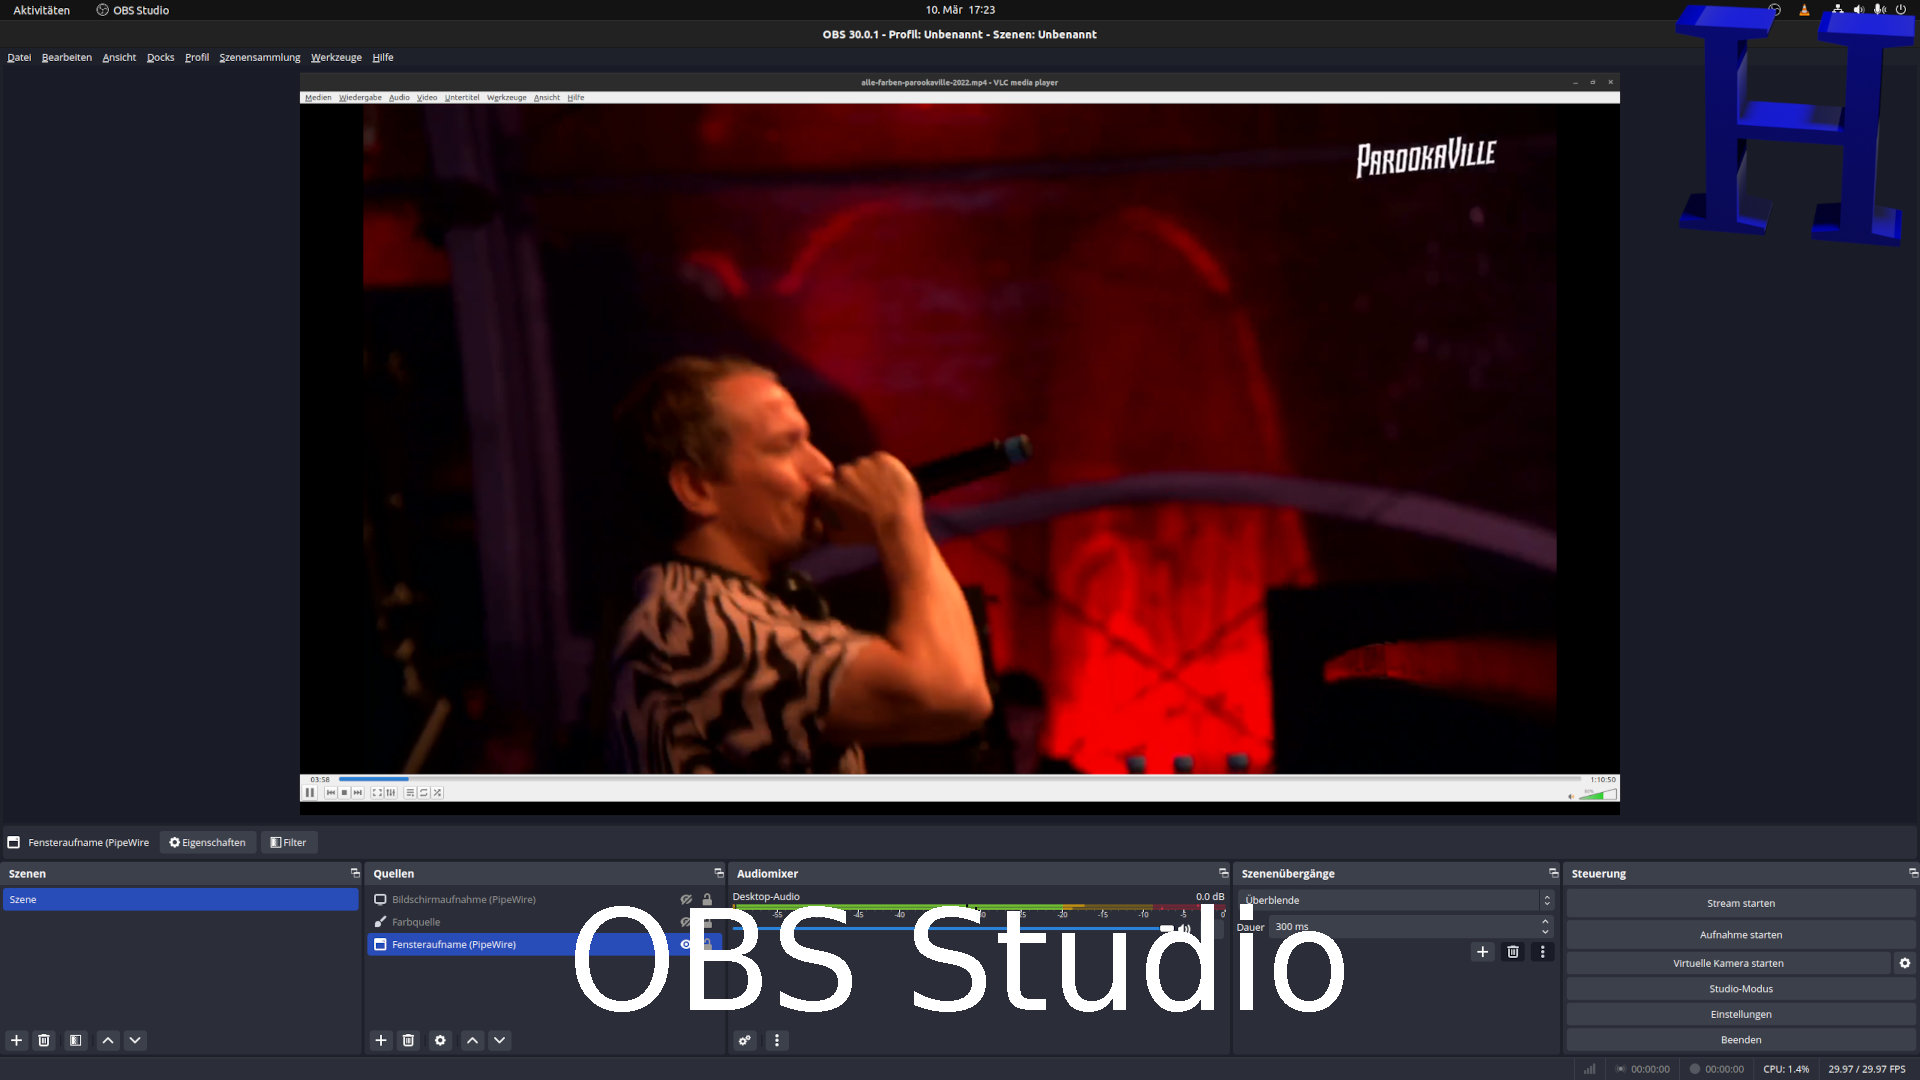 OBS Studio - Open Broadcaster Software Download